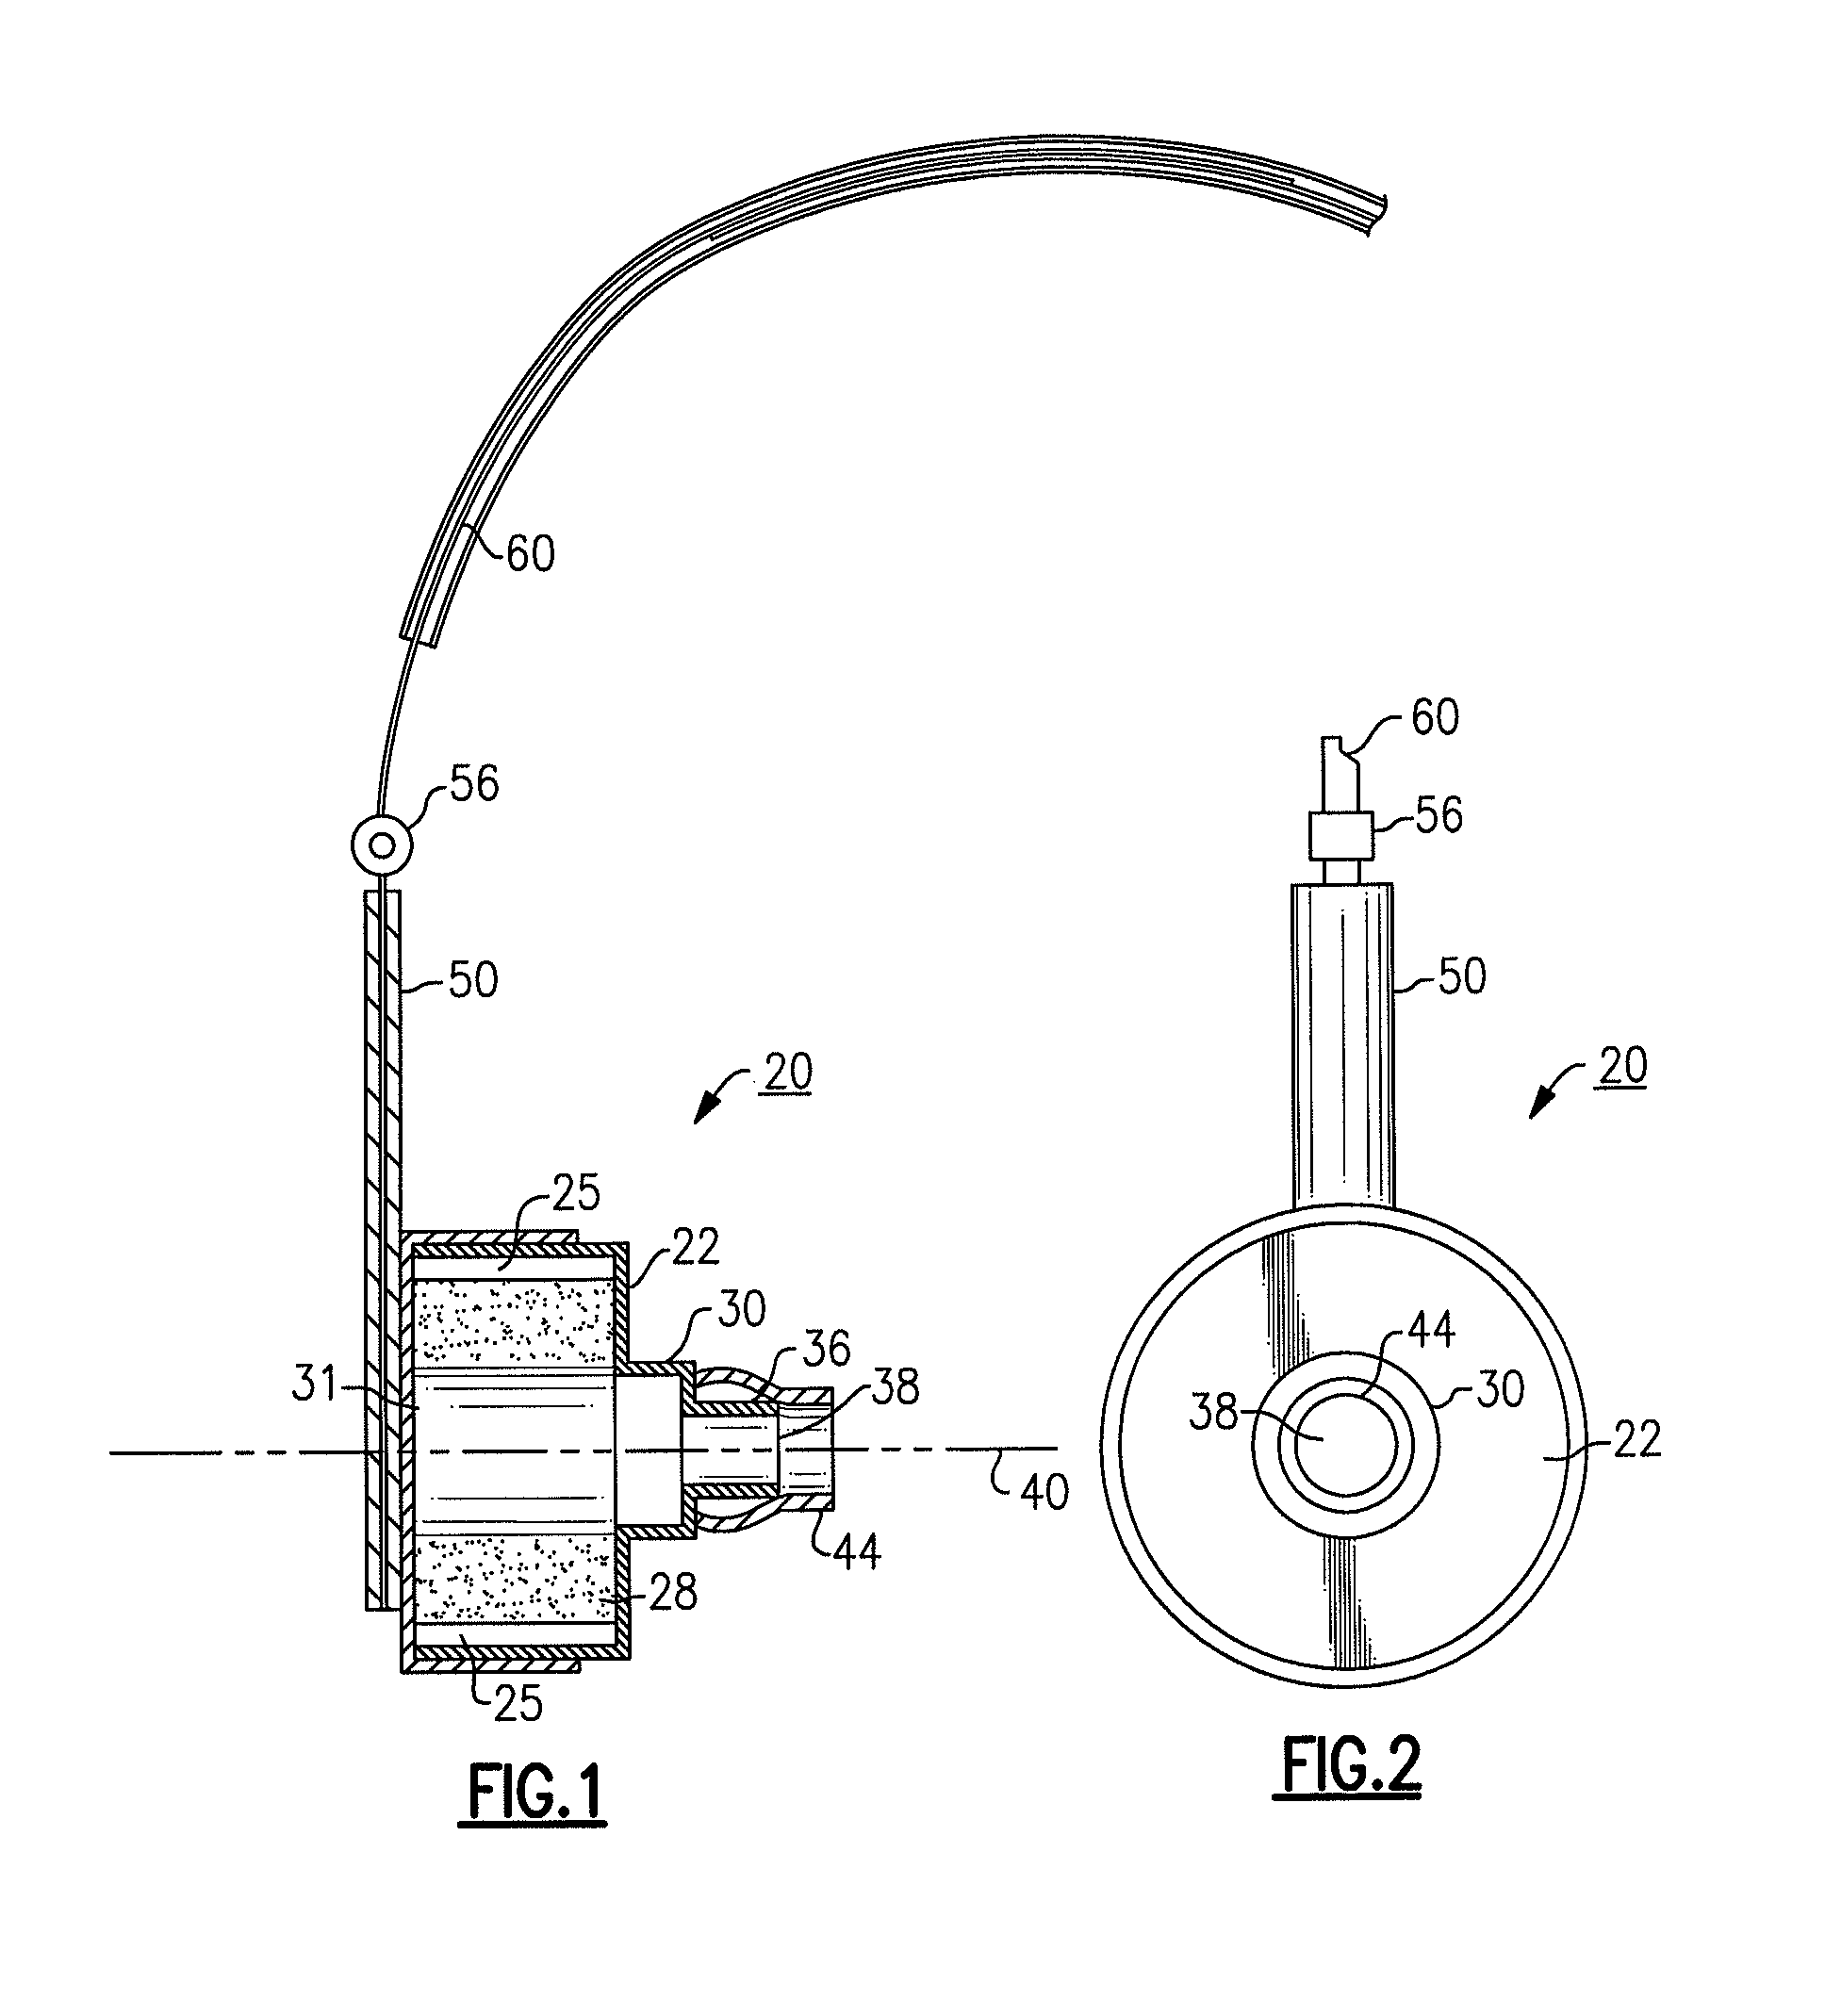 Semi-insert hearing protector having a helmholtz-type resonator